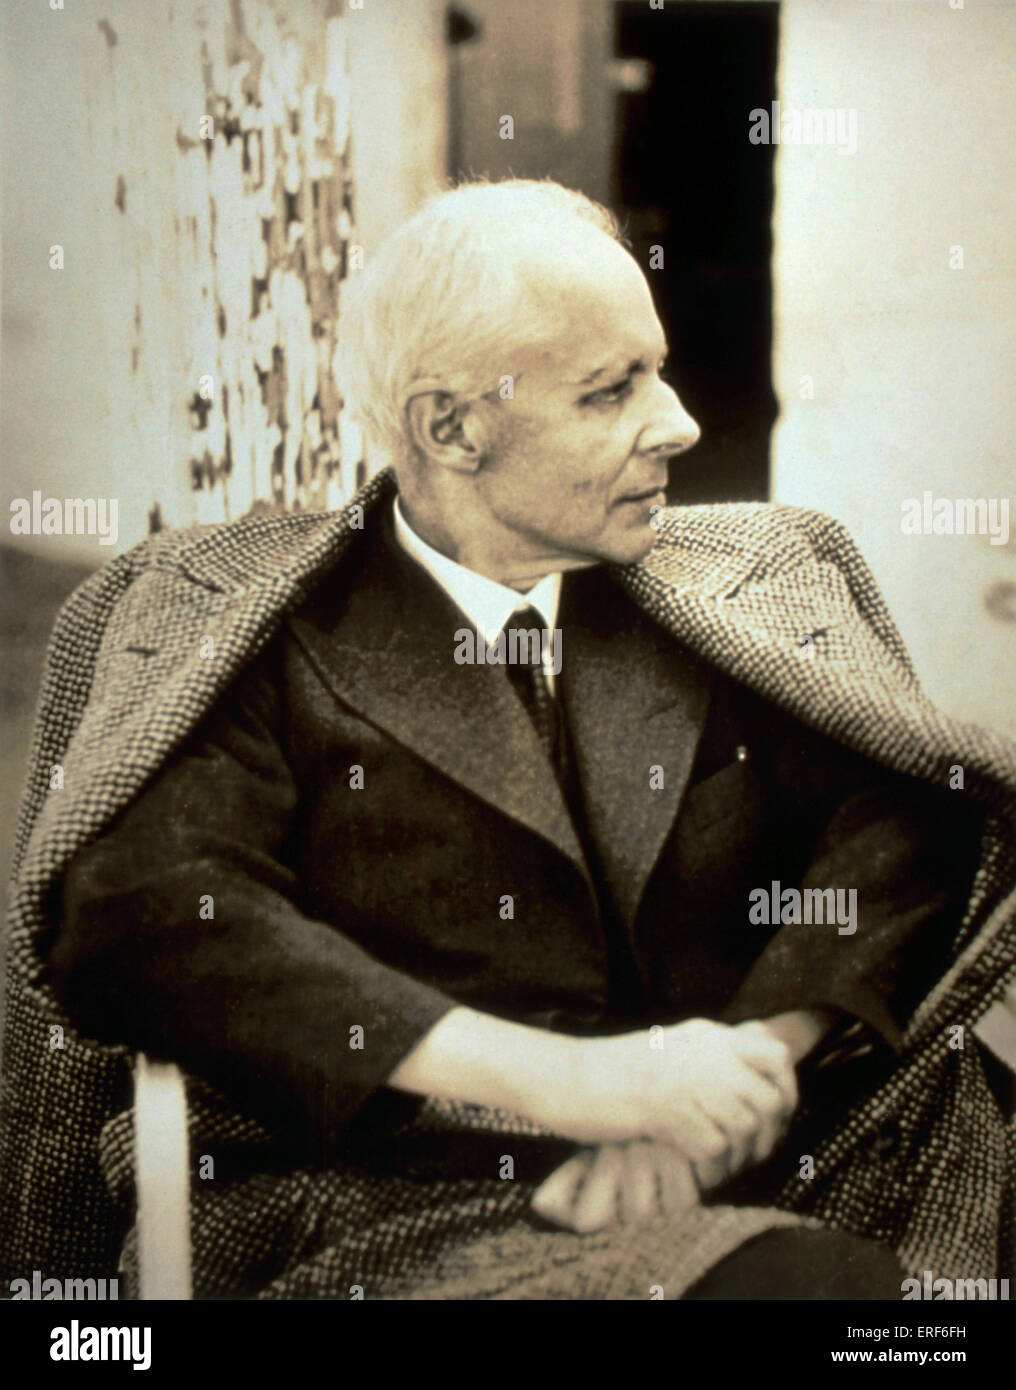 Bela Bartok, portrait. Hungarian composer & pianist, 1881-1945 Stock Photo